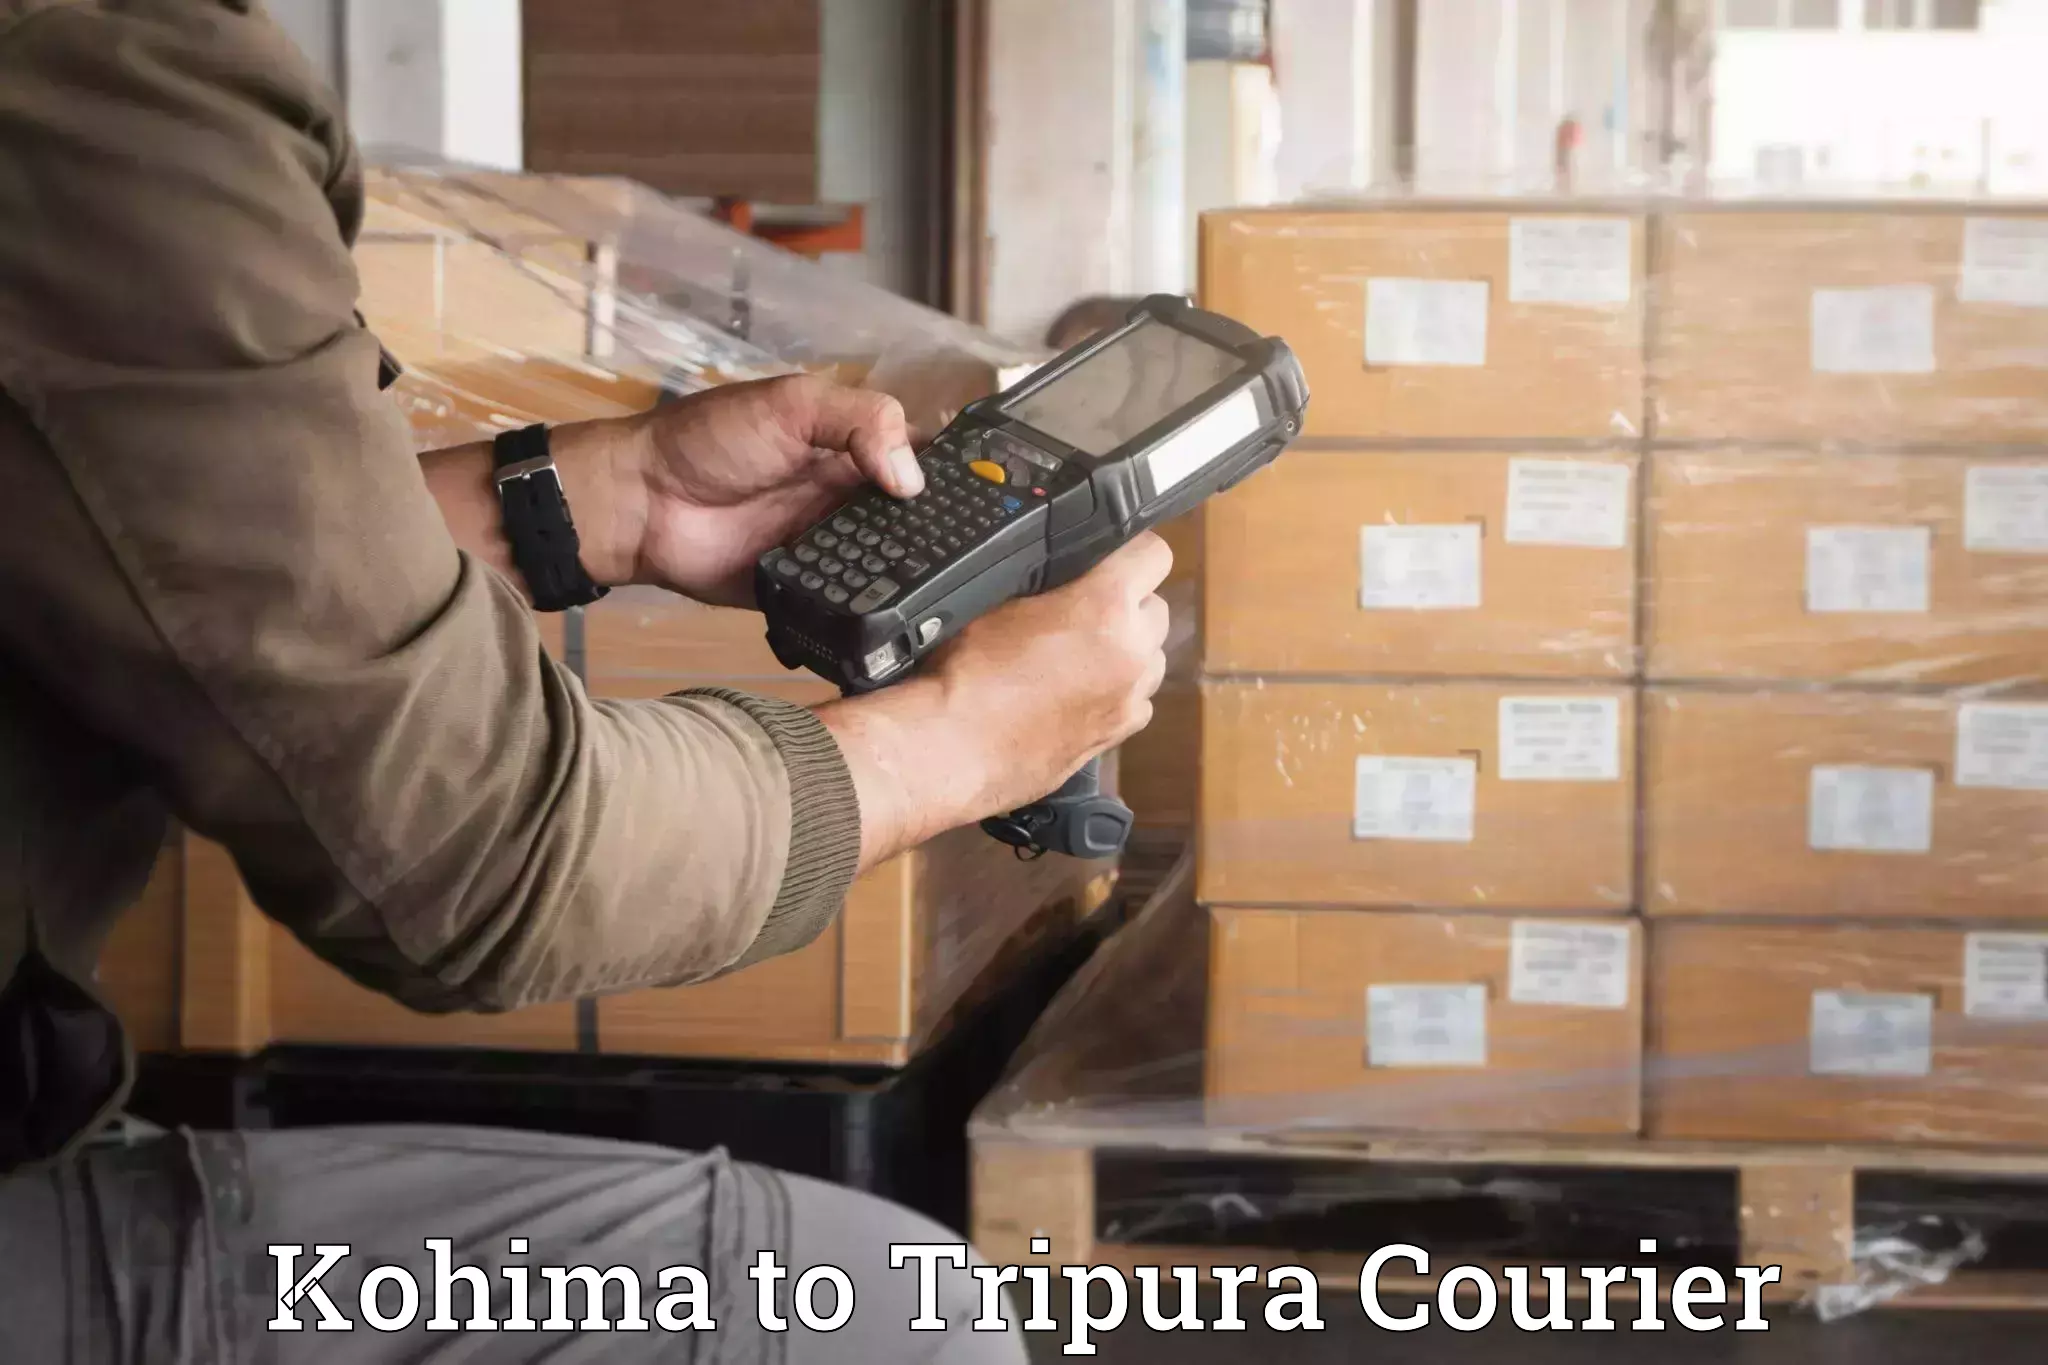 Efficient moving company Kohima to Agartala